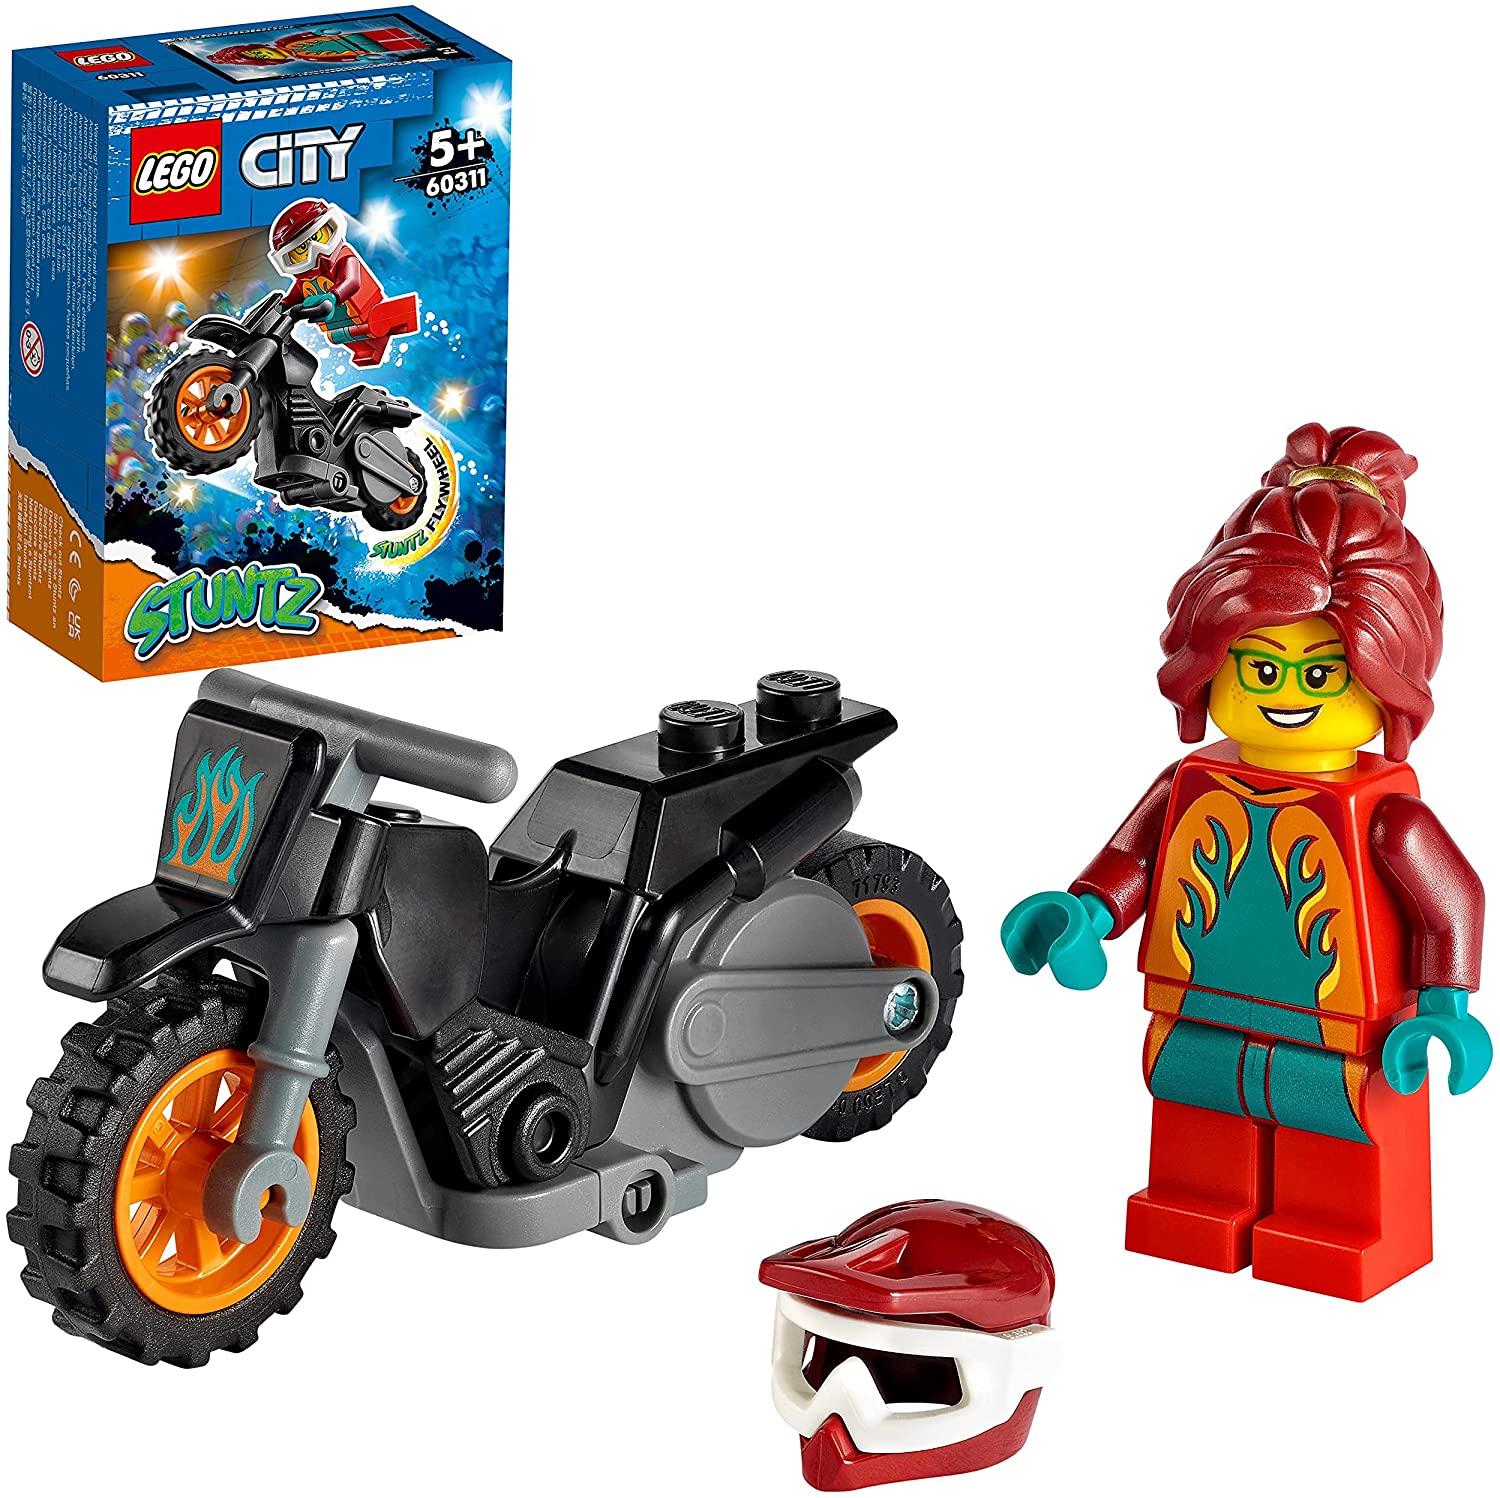 LEGO 60311 City Stuntz Feuer-Stuntbike mit Schwungradantrieb, Spielzeug-Mot